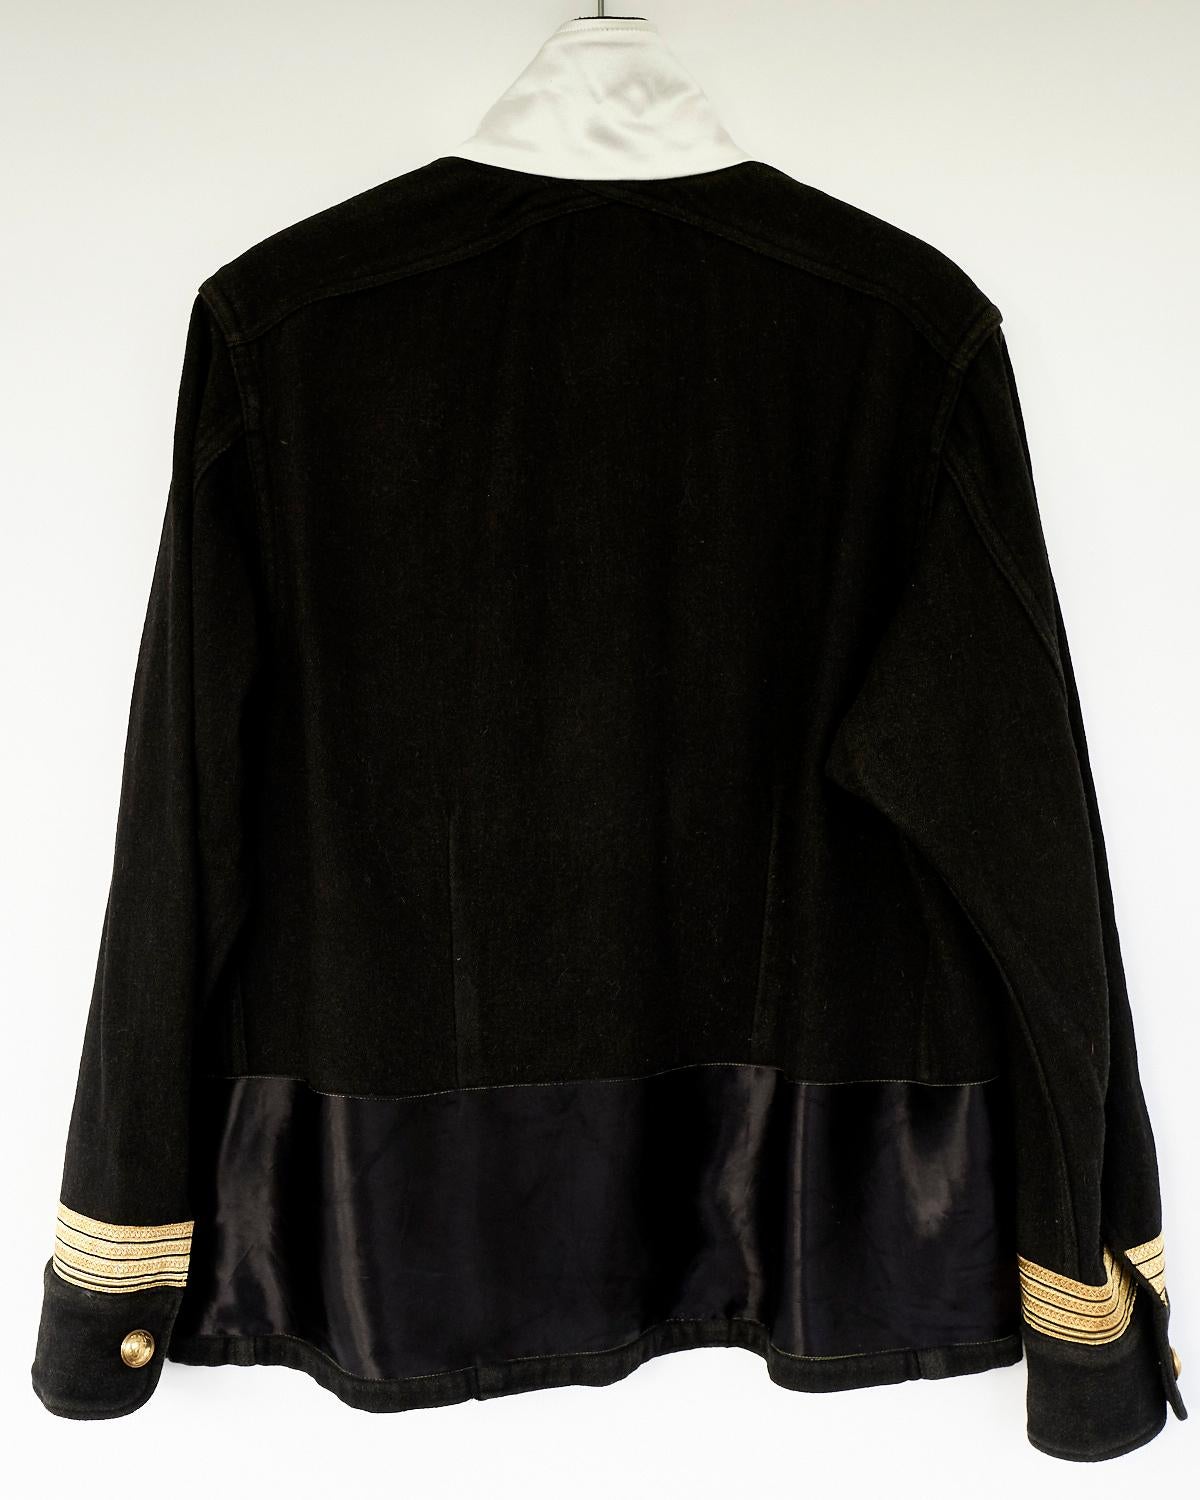 Women's Wool Jacket Gold Braid Off White Silk Collar Embellished Military J Dauphin